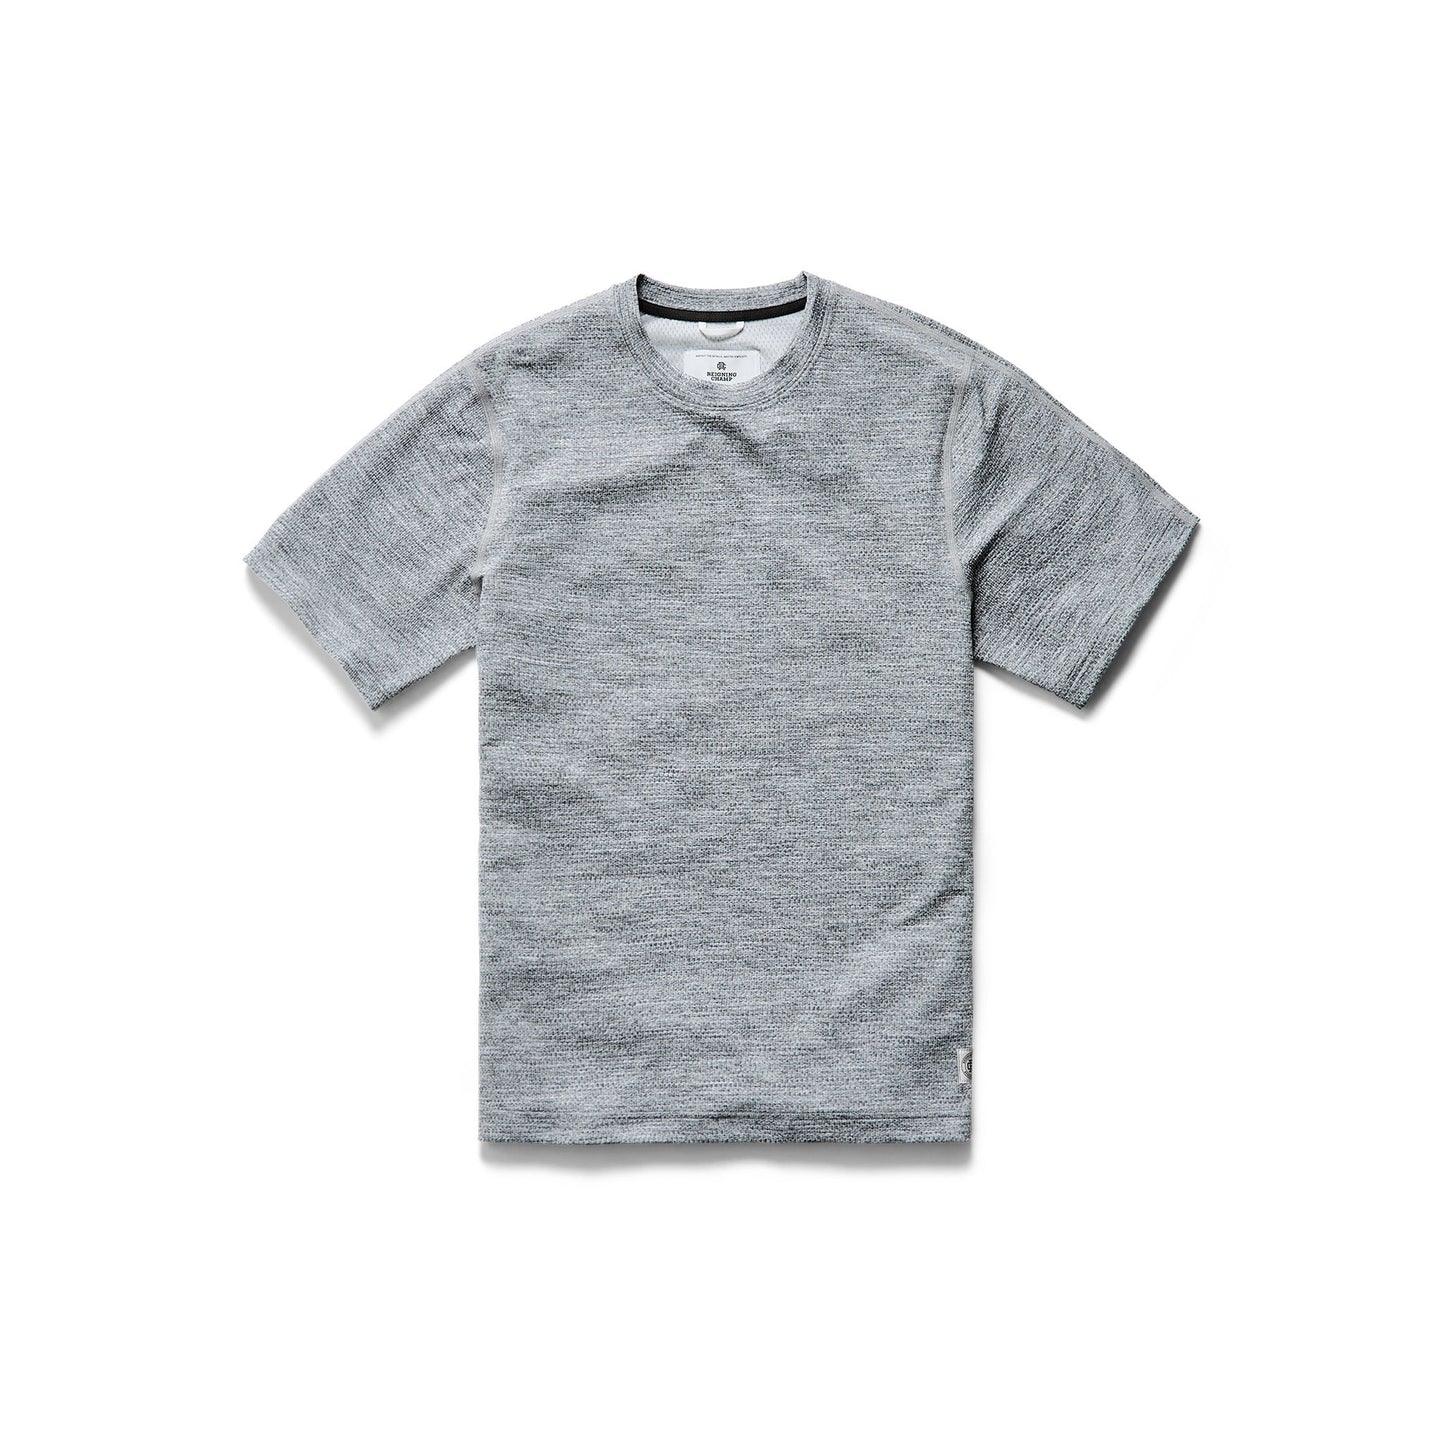 Monochrome mesh T-shirt